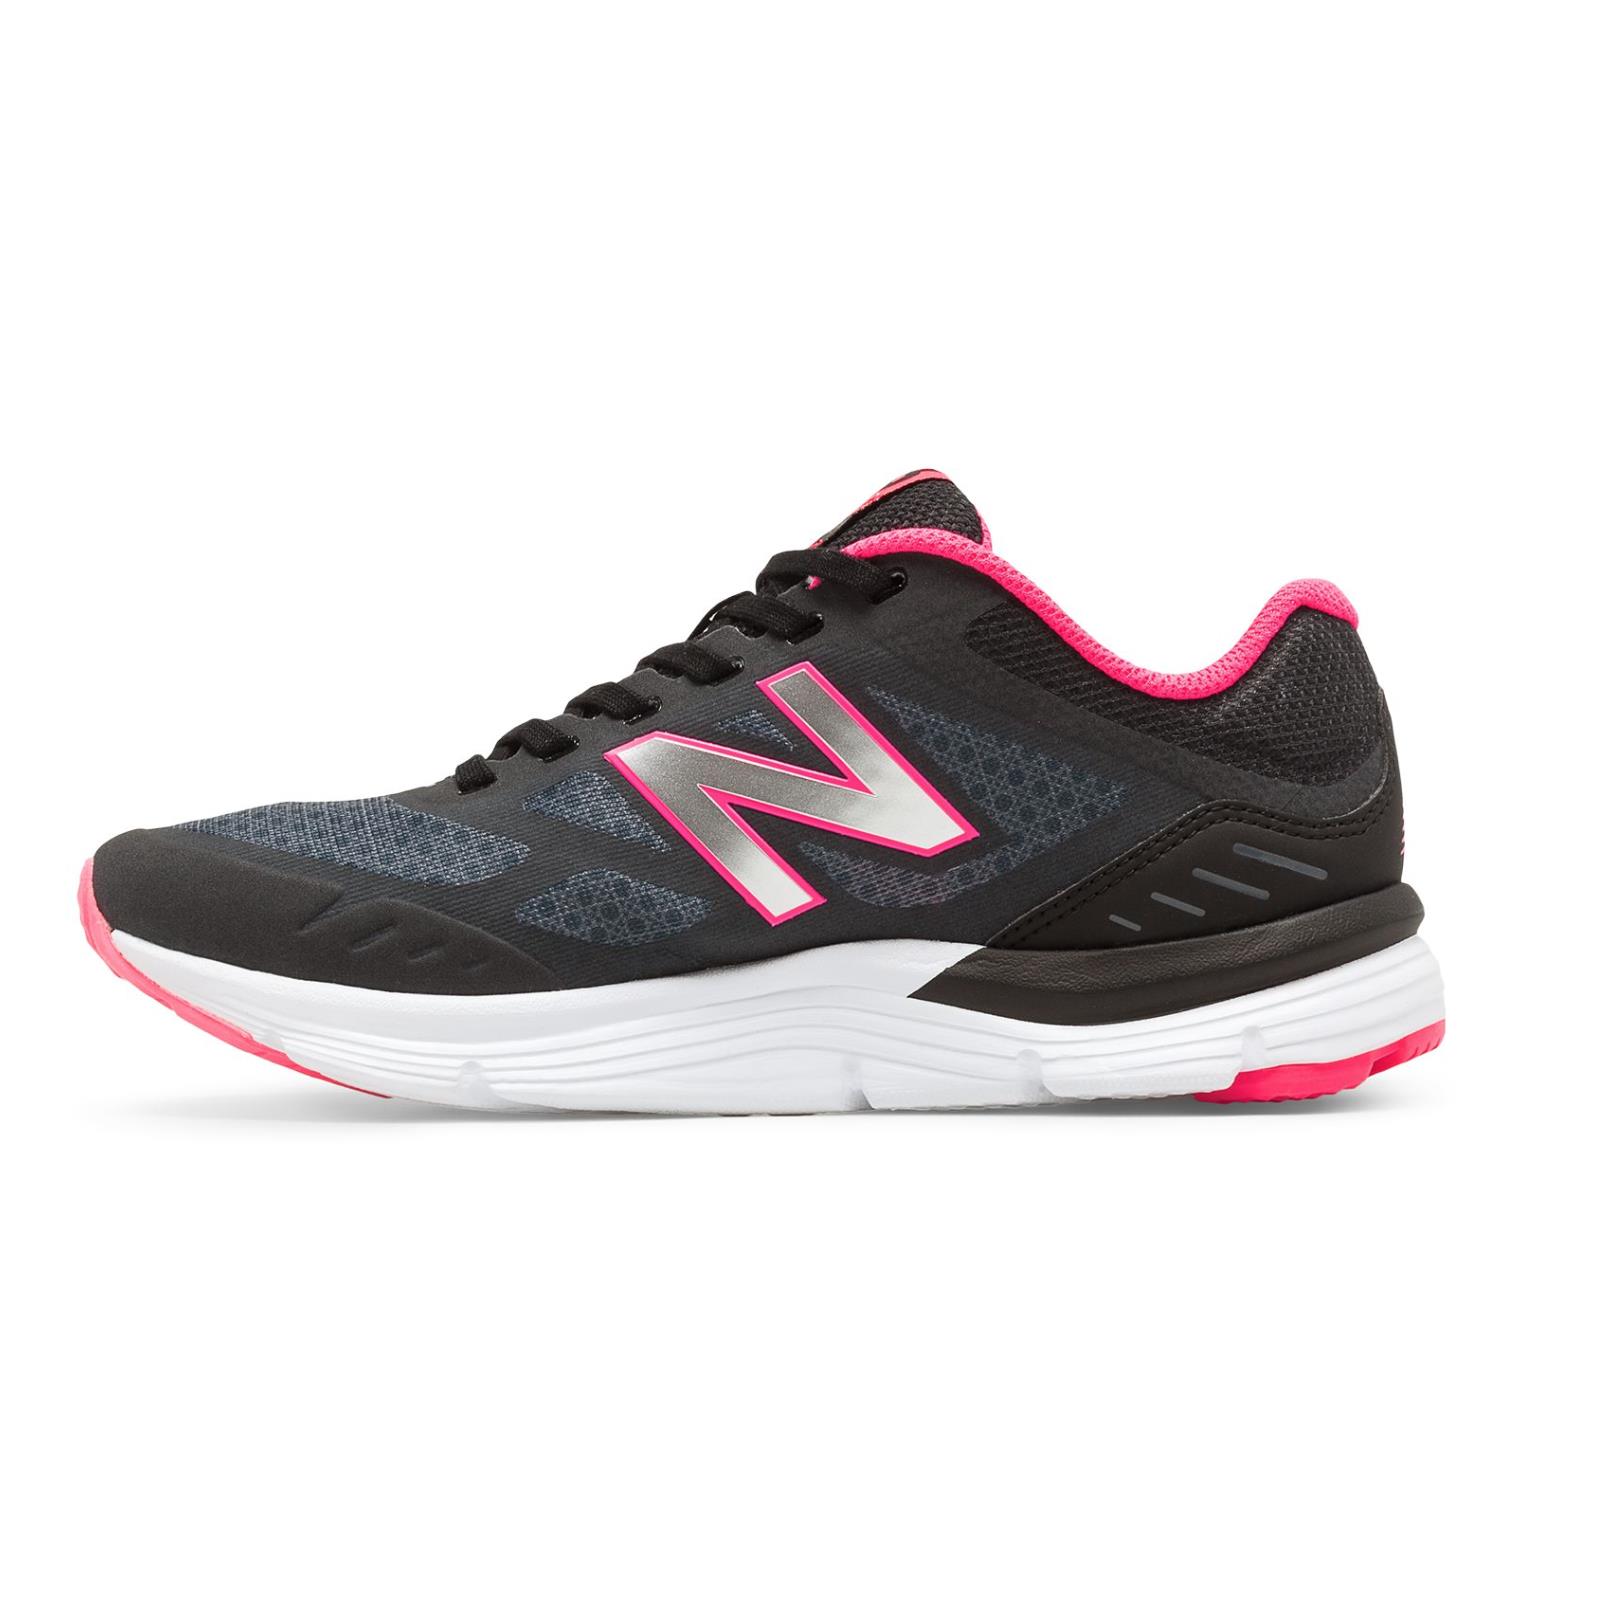 Balance 775v3 Running Course Shoes Black N1290 Women Size 6.5 B